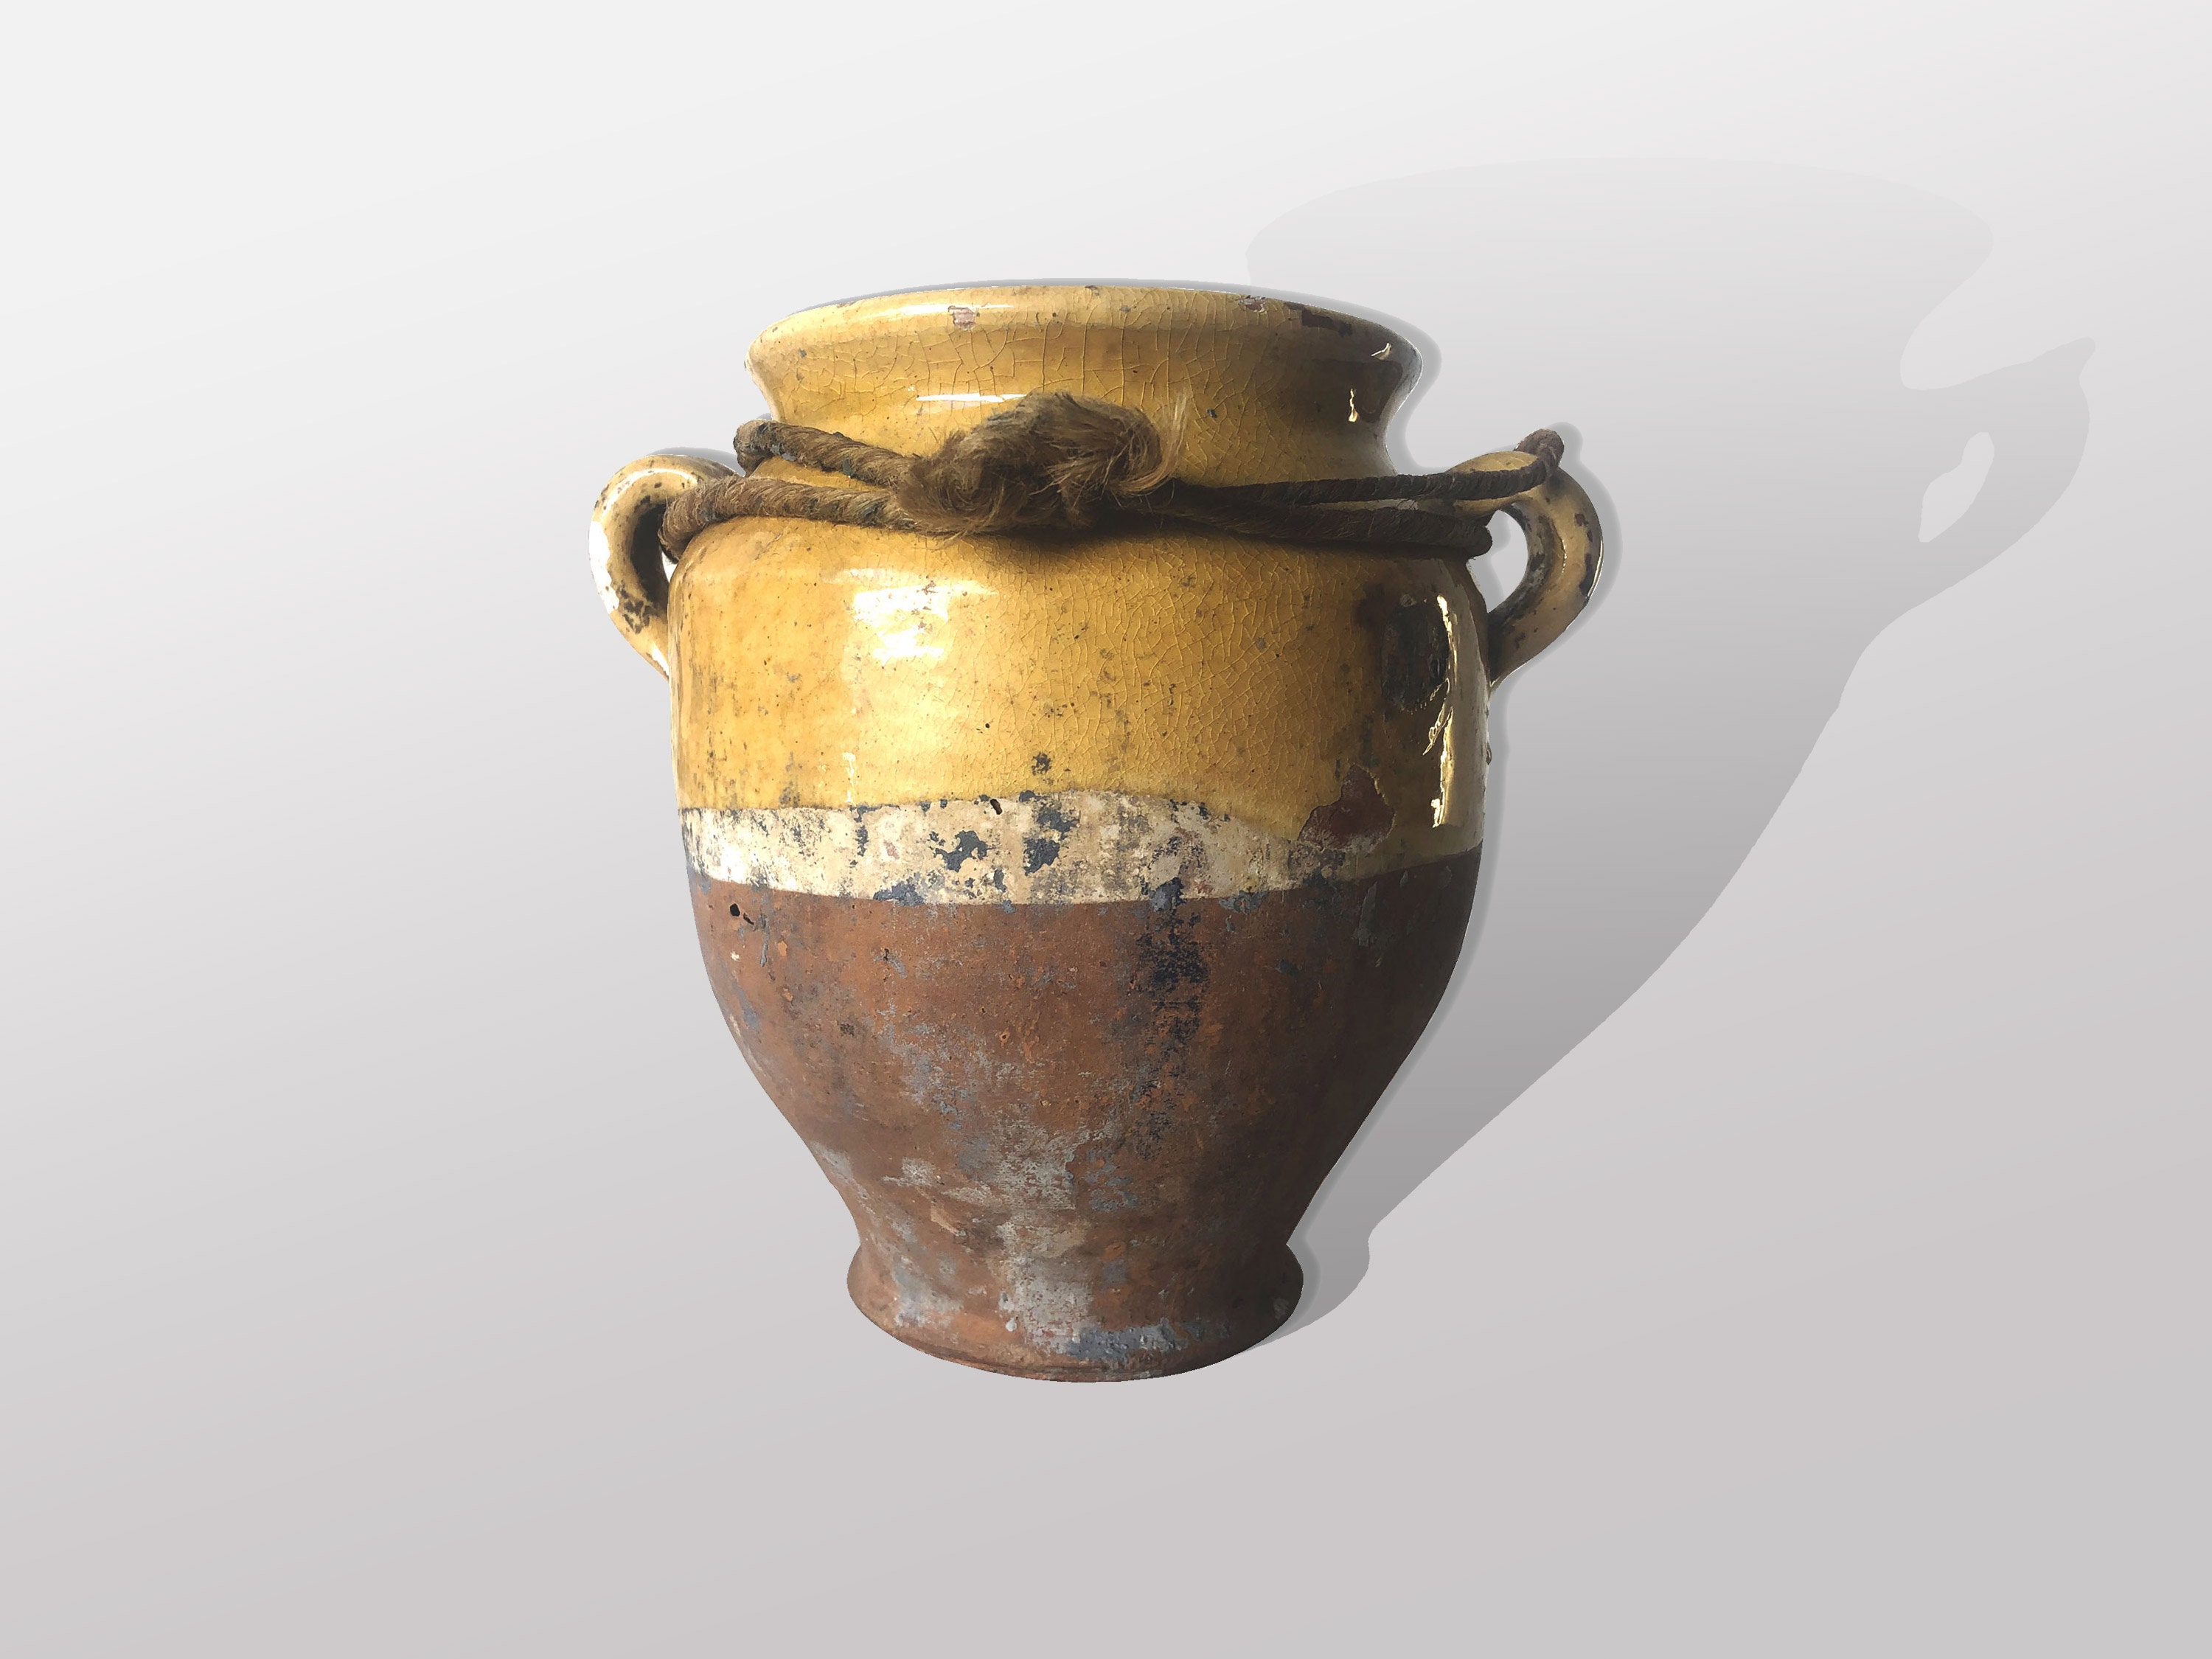 Vintage Small Jar Pottery Poterie Jaune Vernissée France Ancien Sud-Ouest 19 Siecle French Way Of Li